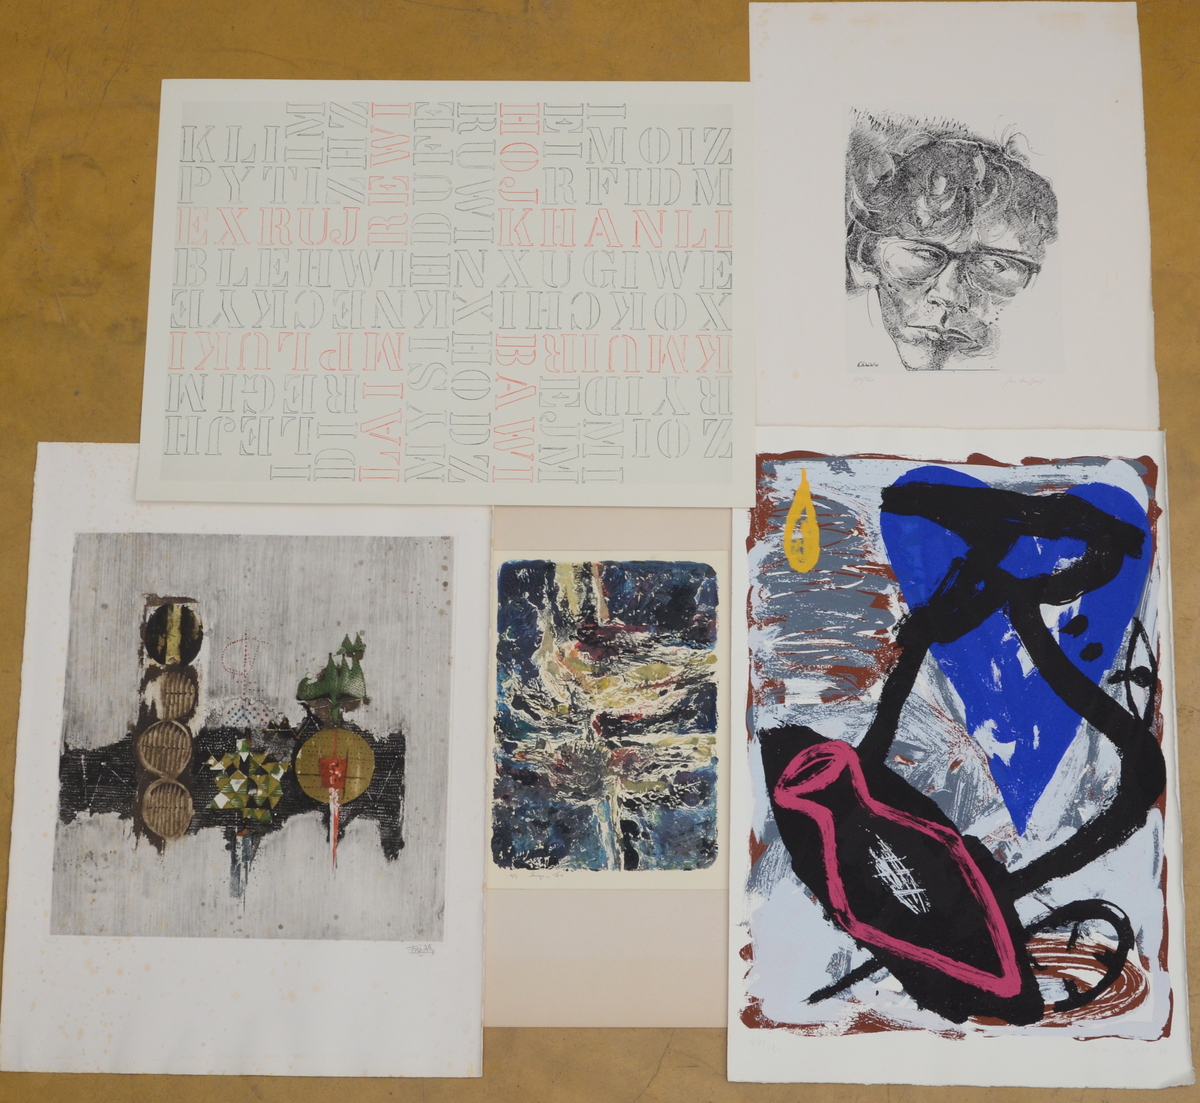 Lot: large selection of prints by De Mey, Burssens Huysman, Maet, Vandenberg, Wittewrongel, - Image 2 of 3